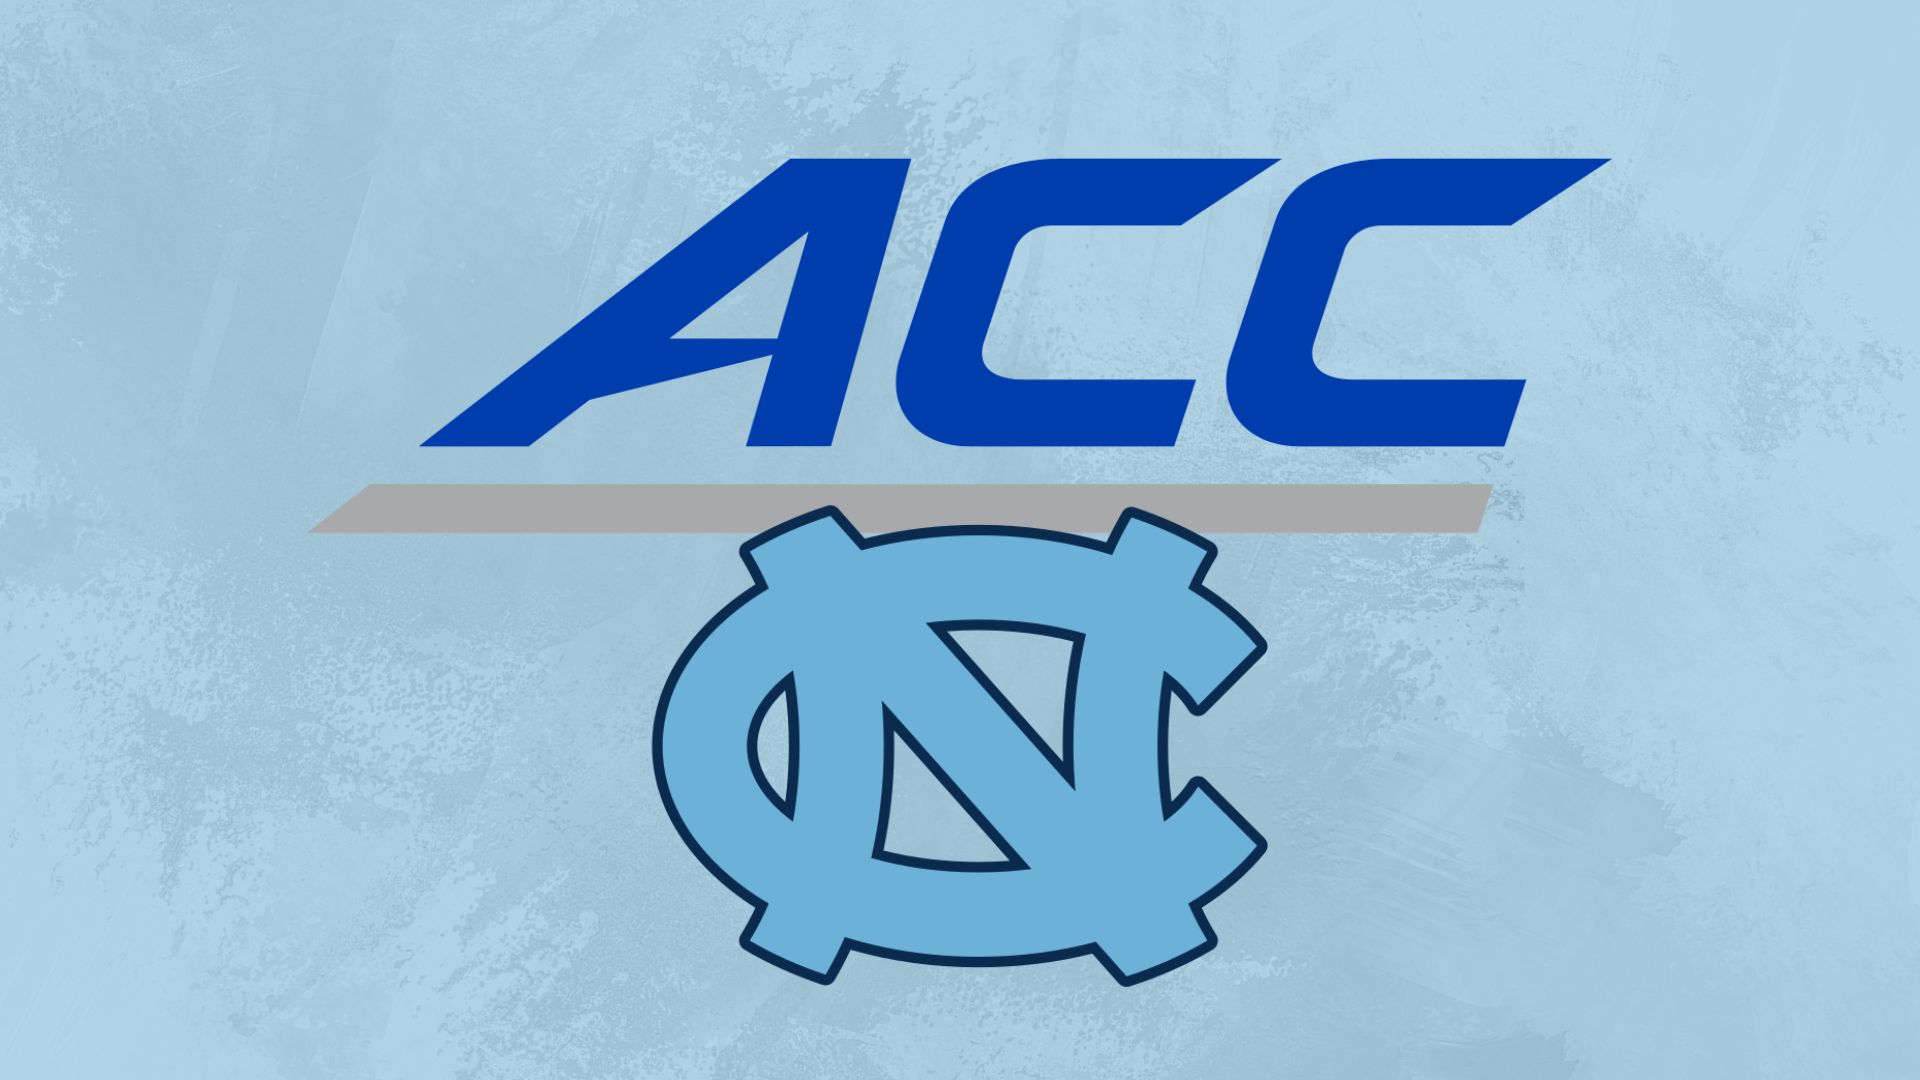 North Carolina Tar Heels: Outdoor Logo - Officially Licensed NCAA